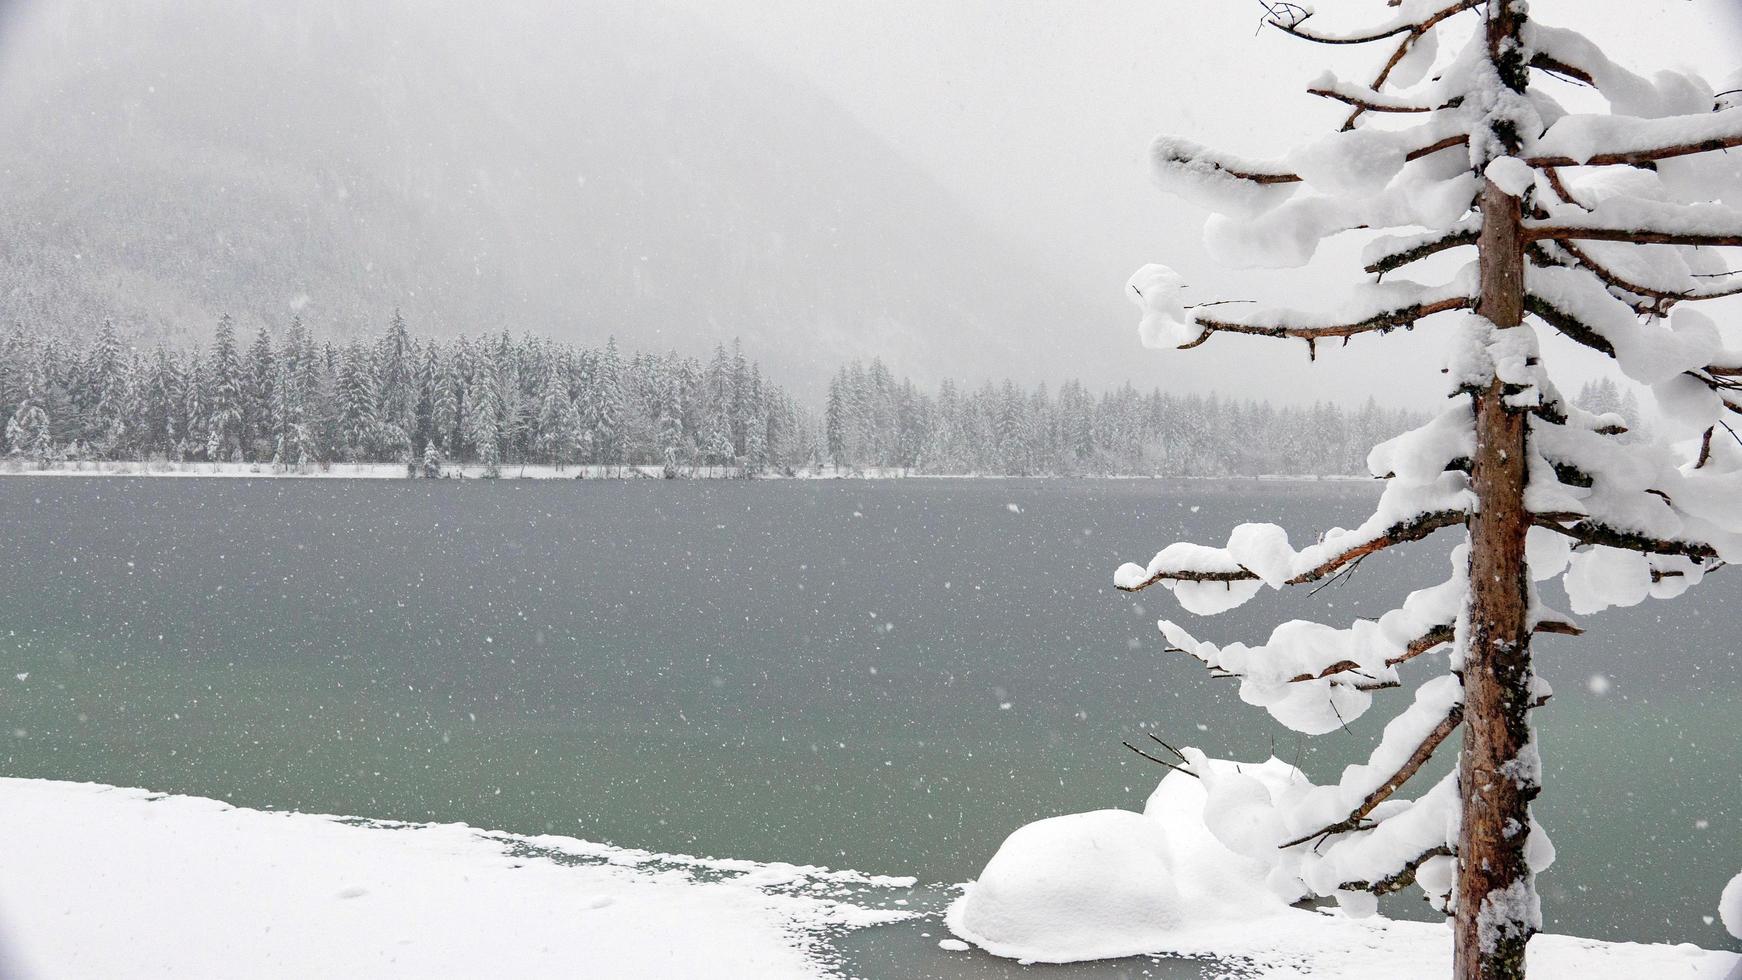 Scenic winter landscape by a frozen lake photo